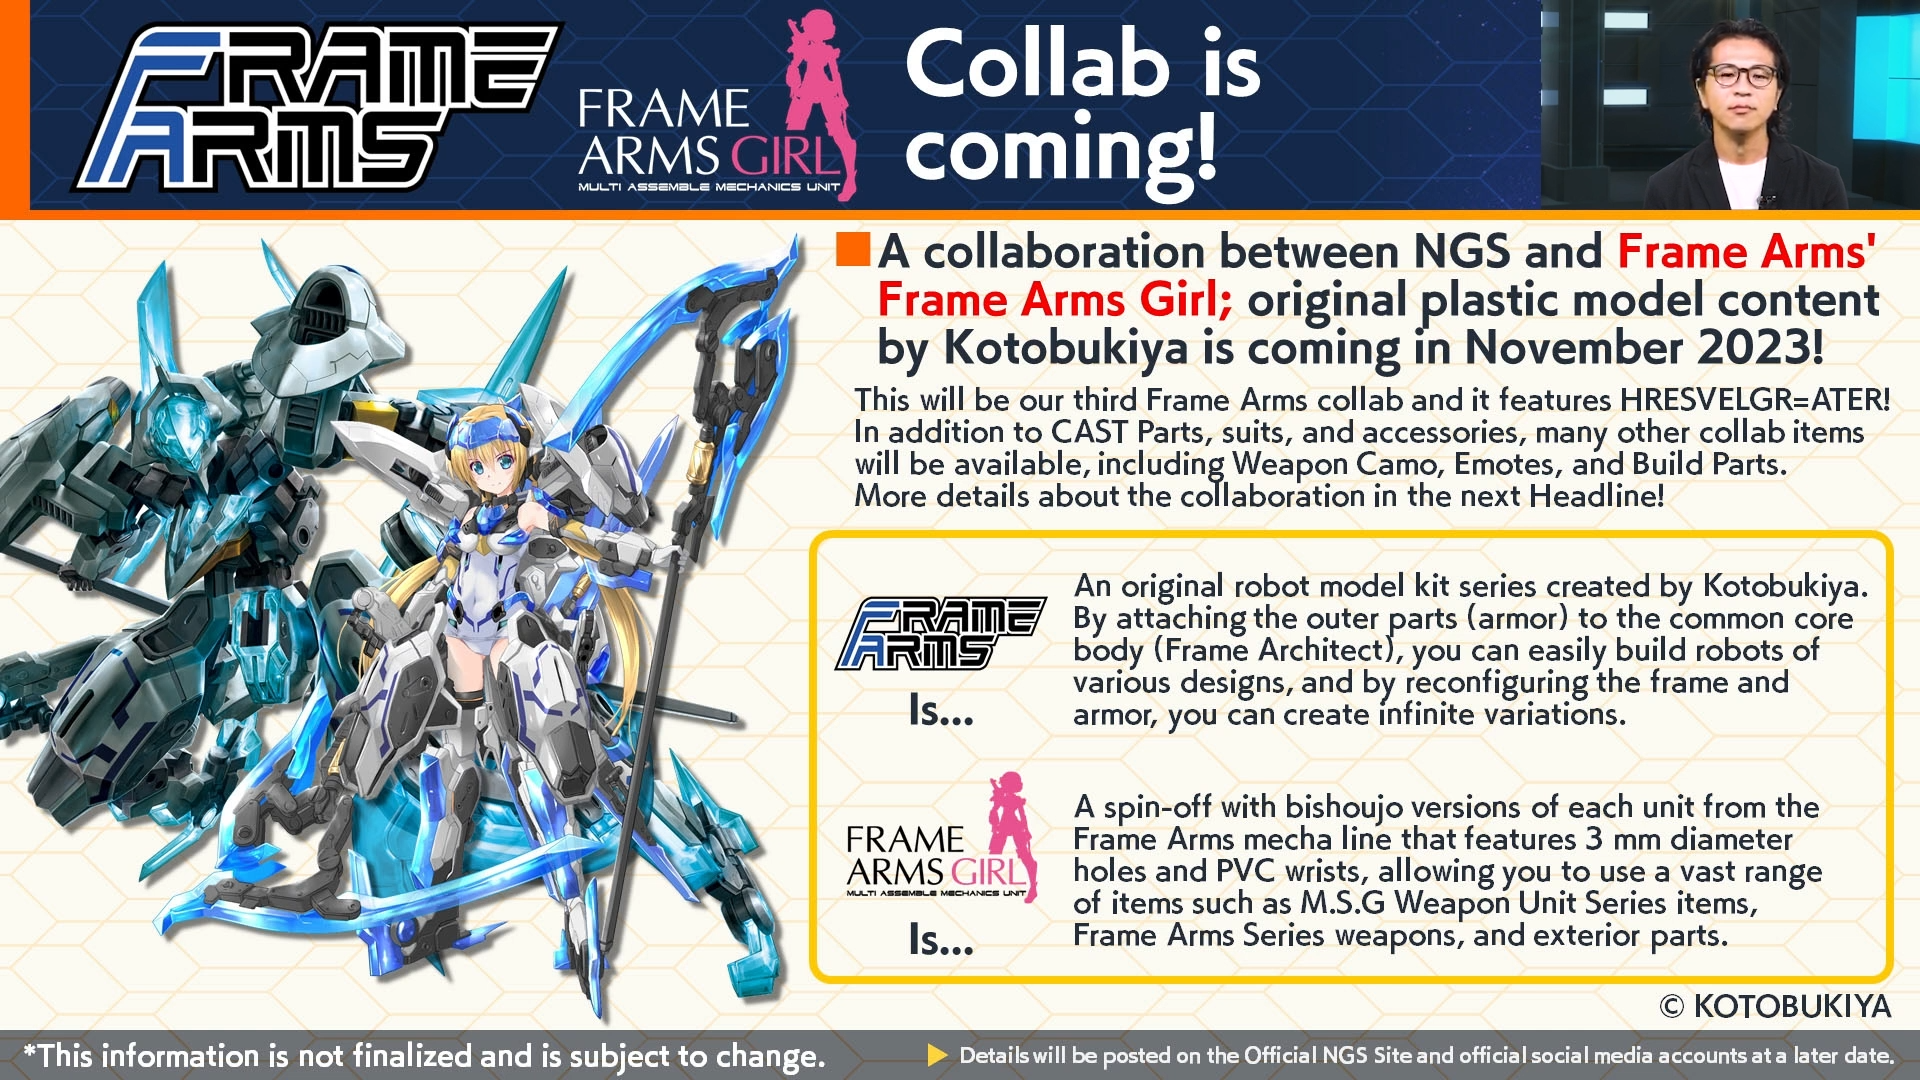 Oshi no Ko Collaborates with SEGA's Phantasy Star Online 2 New